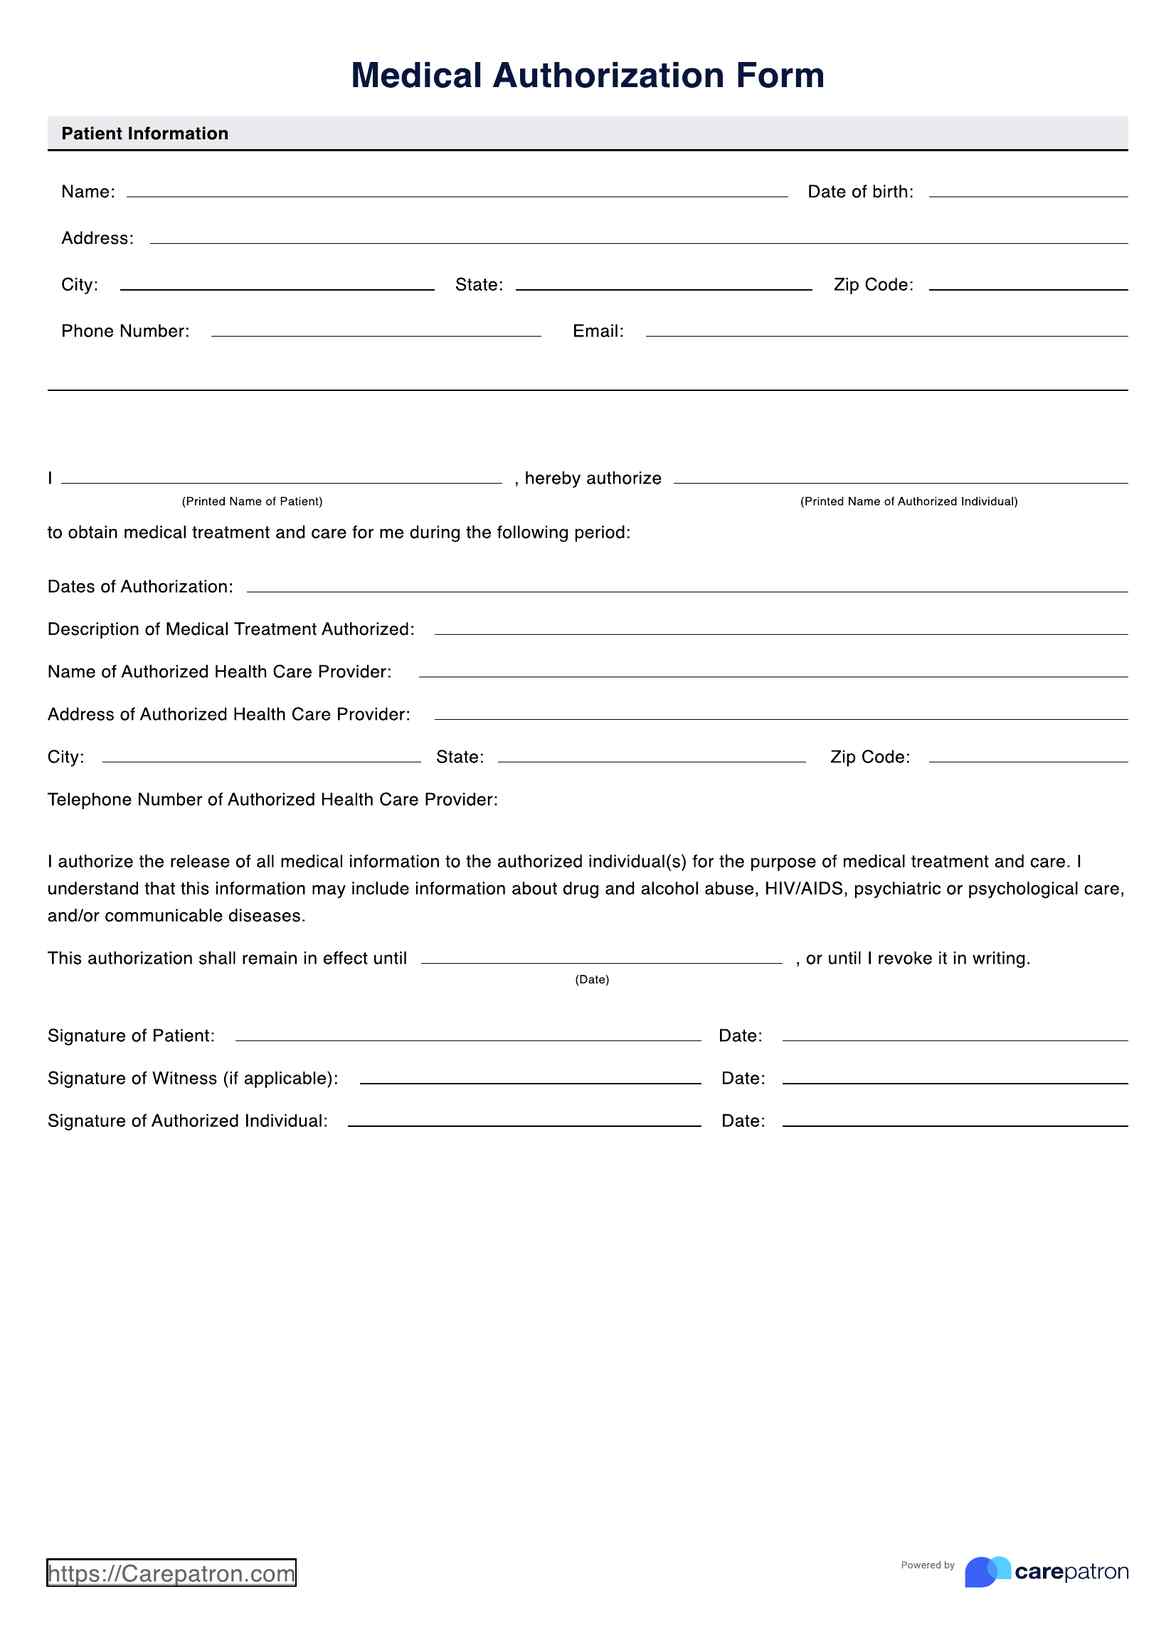 Medical Authorization Form PDF Example